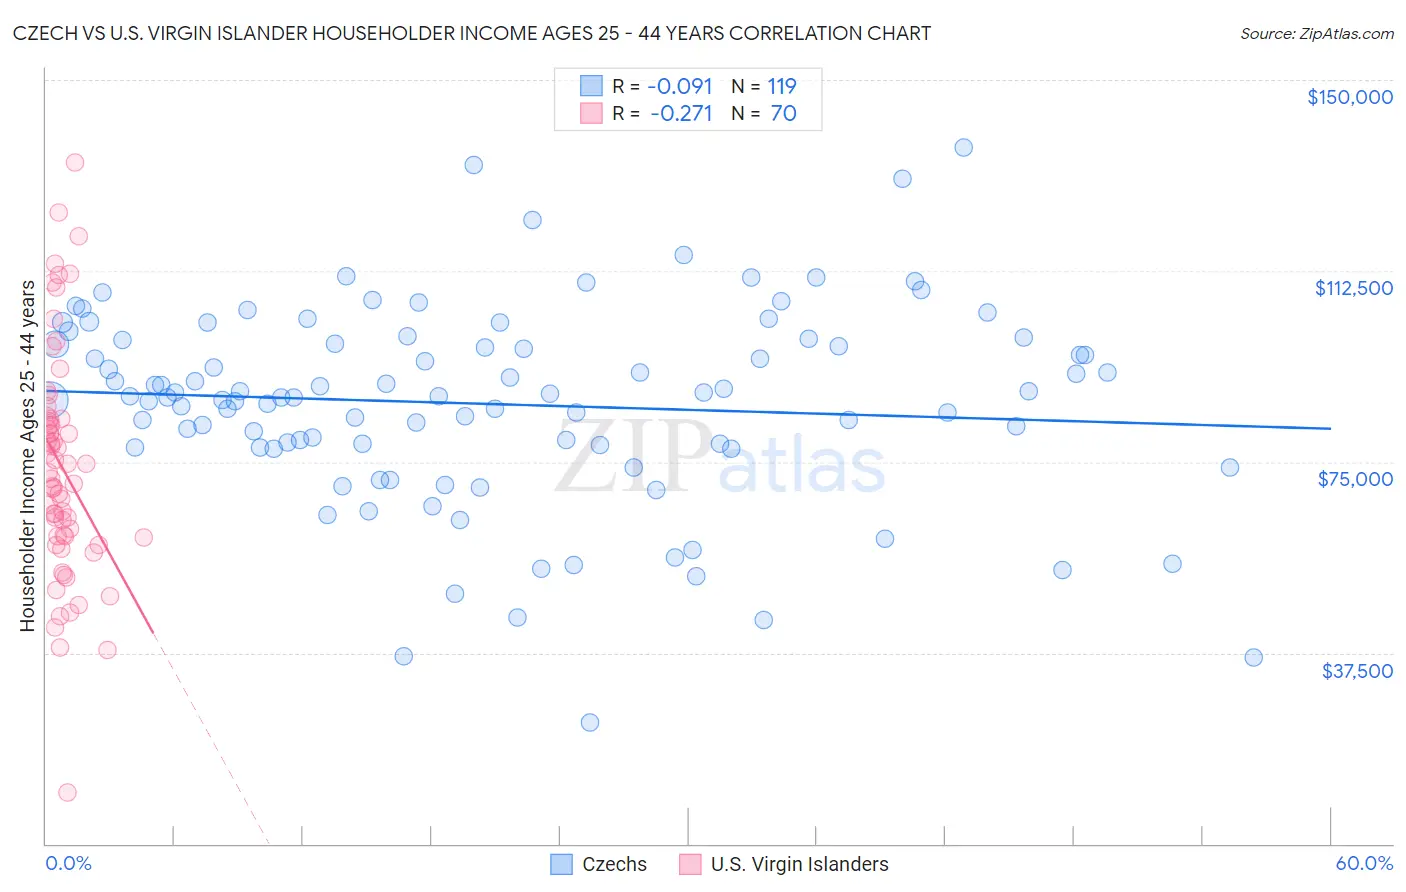 Czech vs U.S. Virgin Islander Householder Income Ages 25 - 44 years